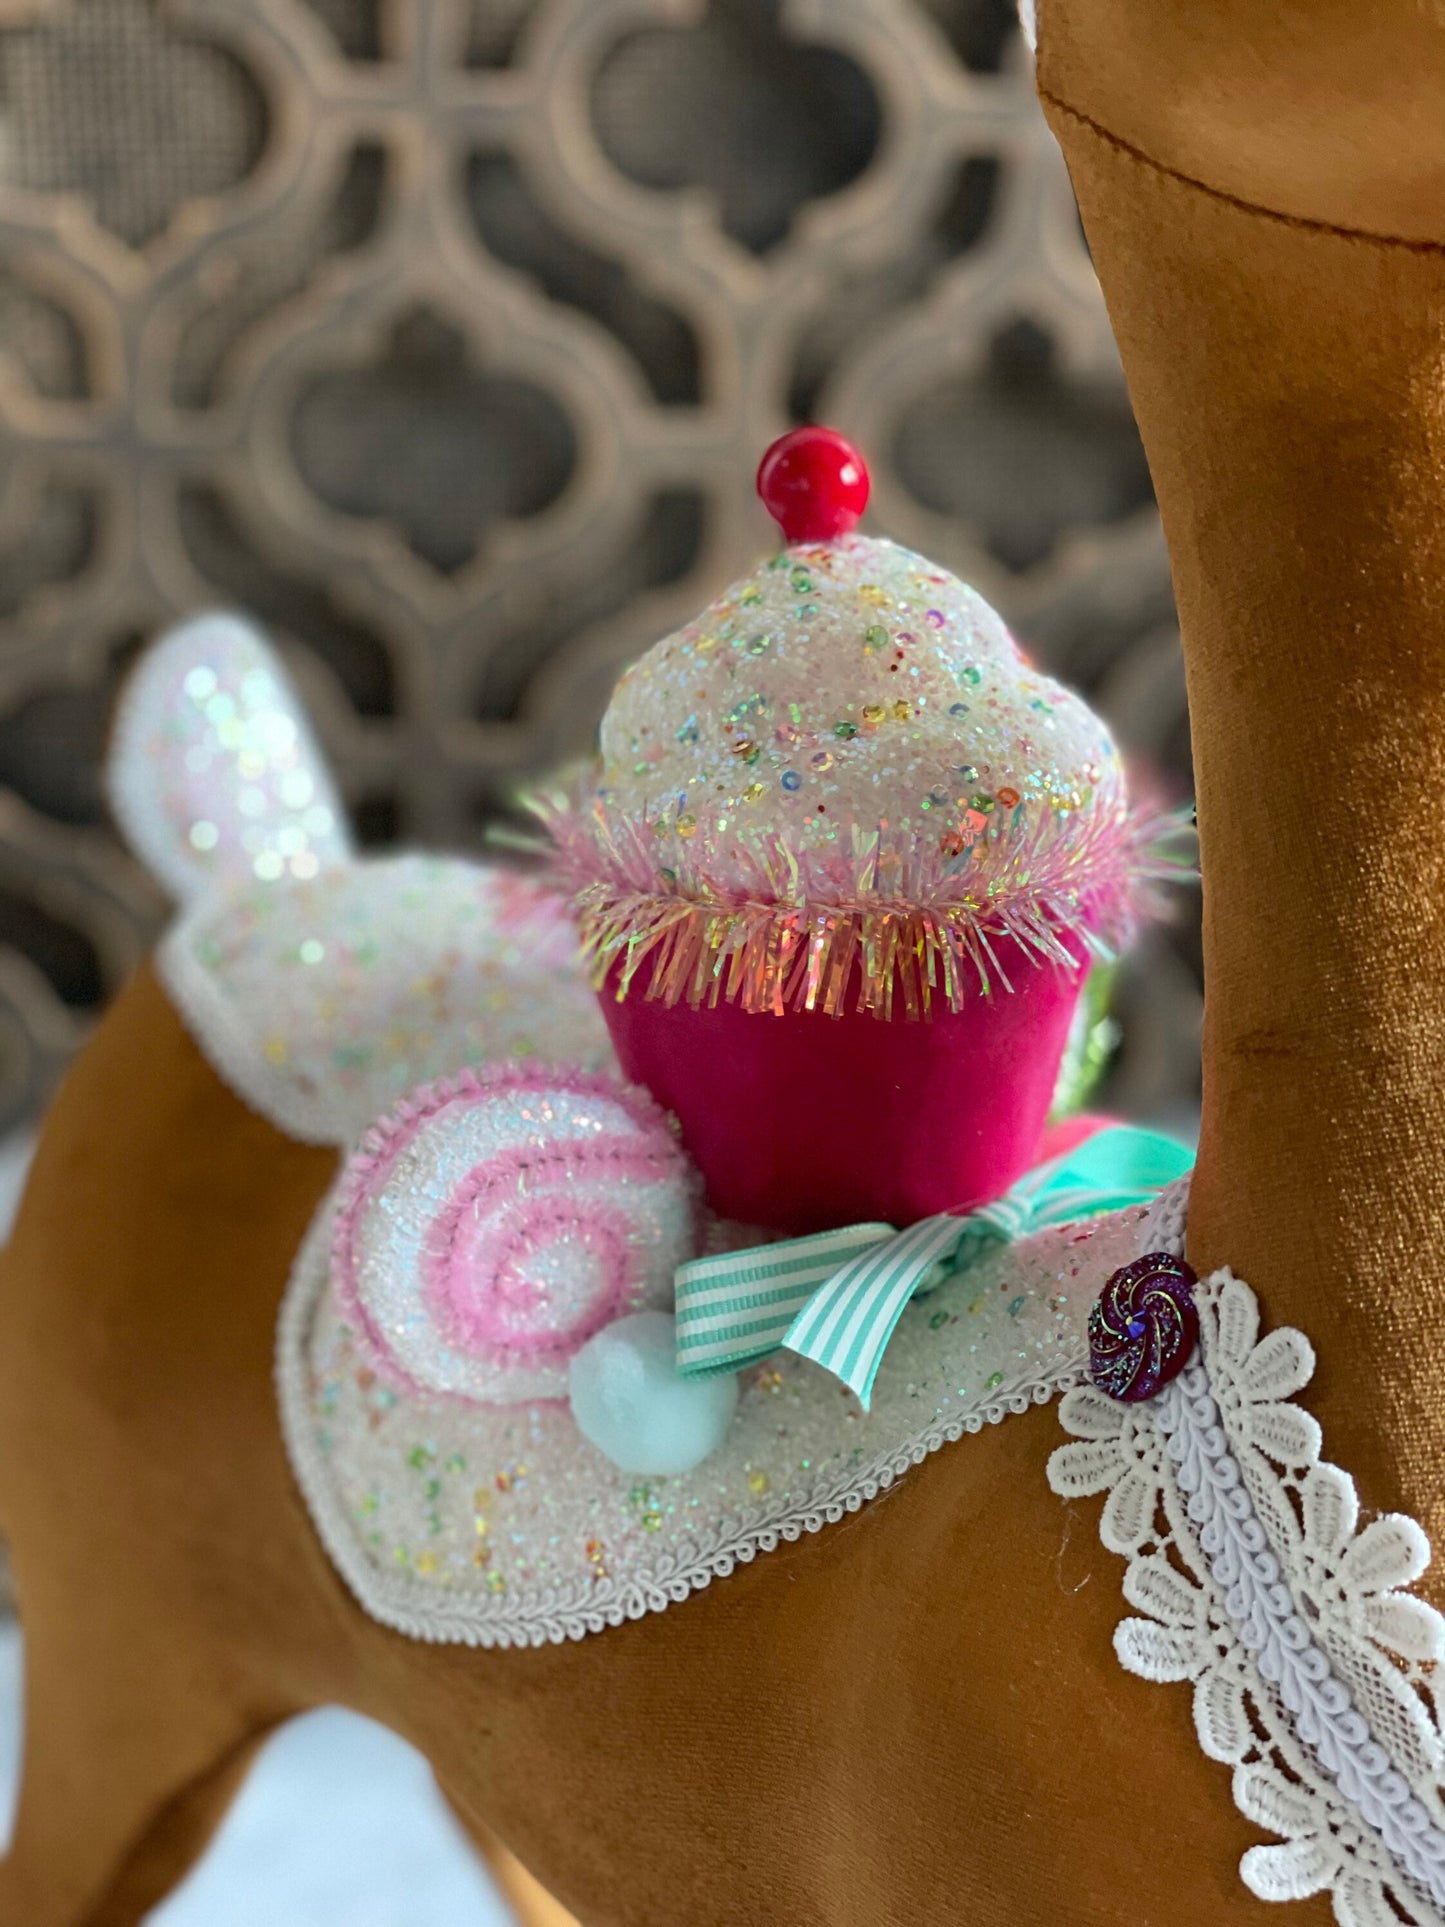 30” Reindeer with cupcake and candies standing ornament. Display reindeer. Christmas.